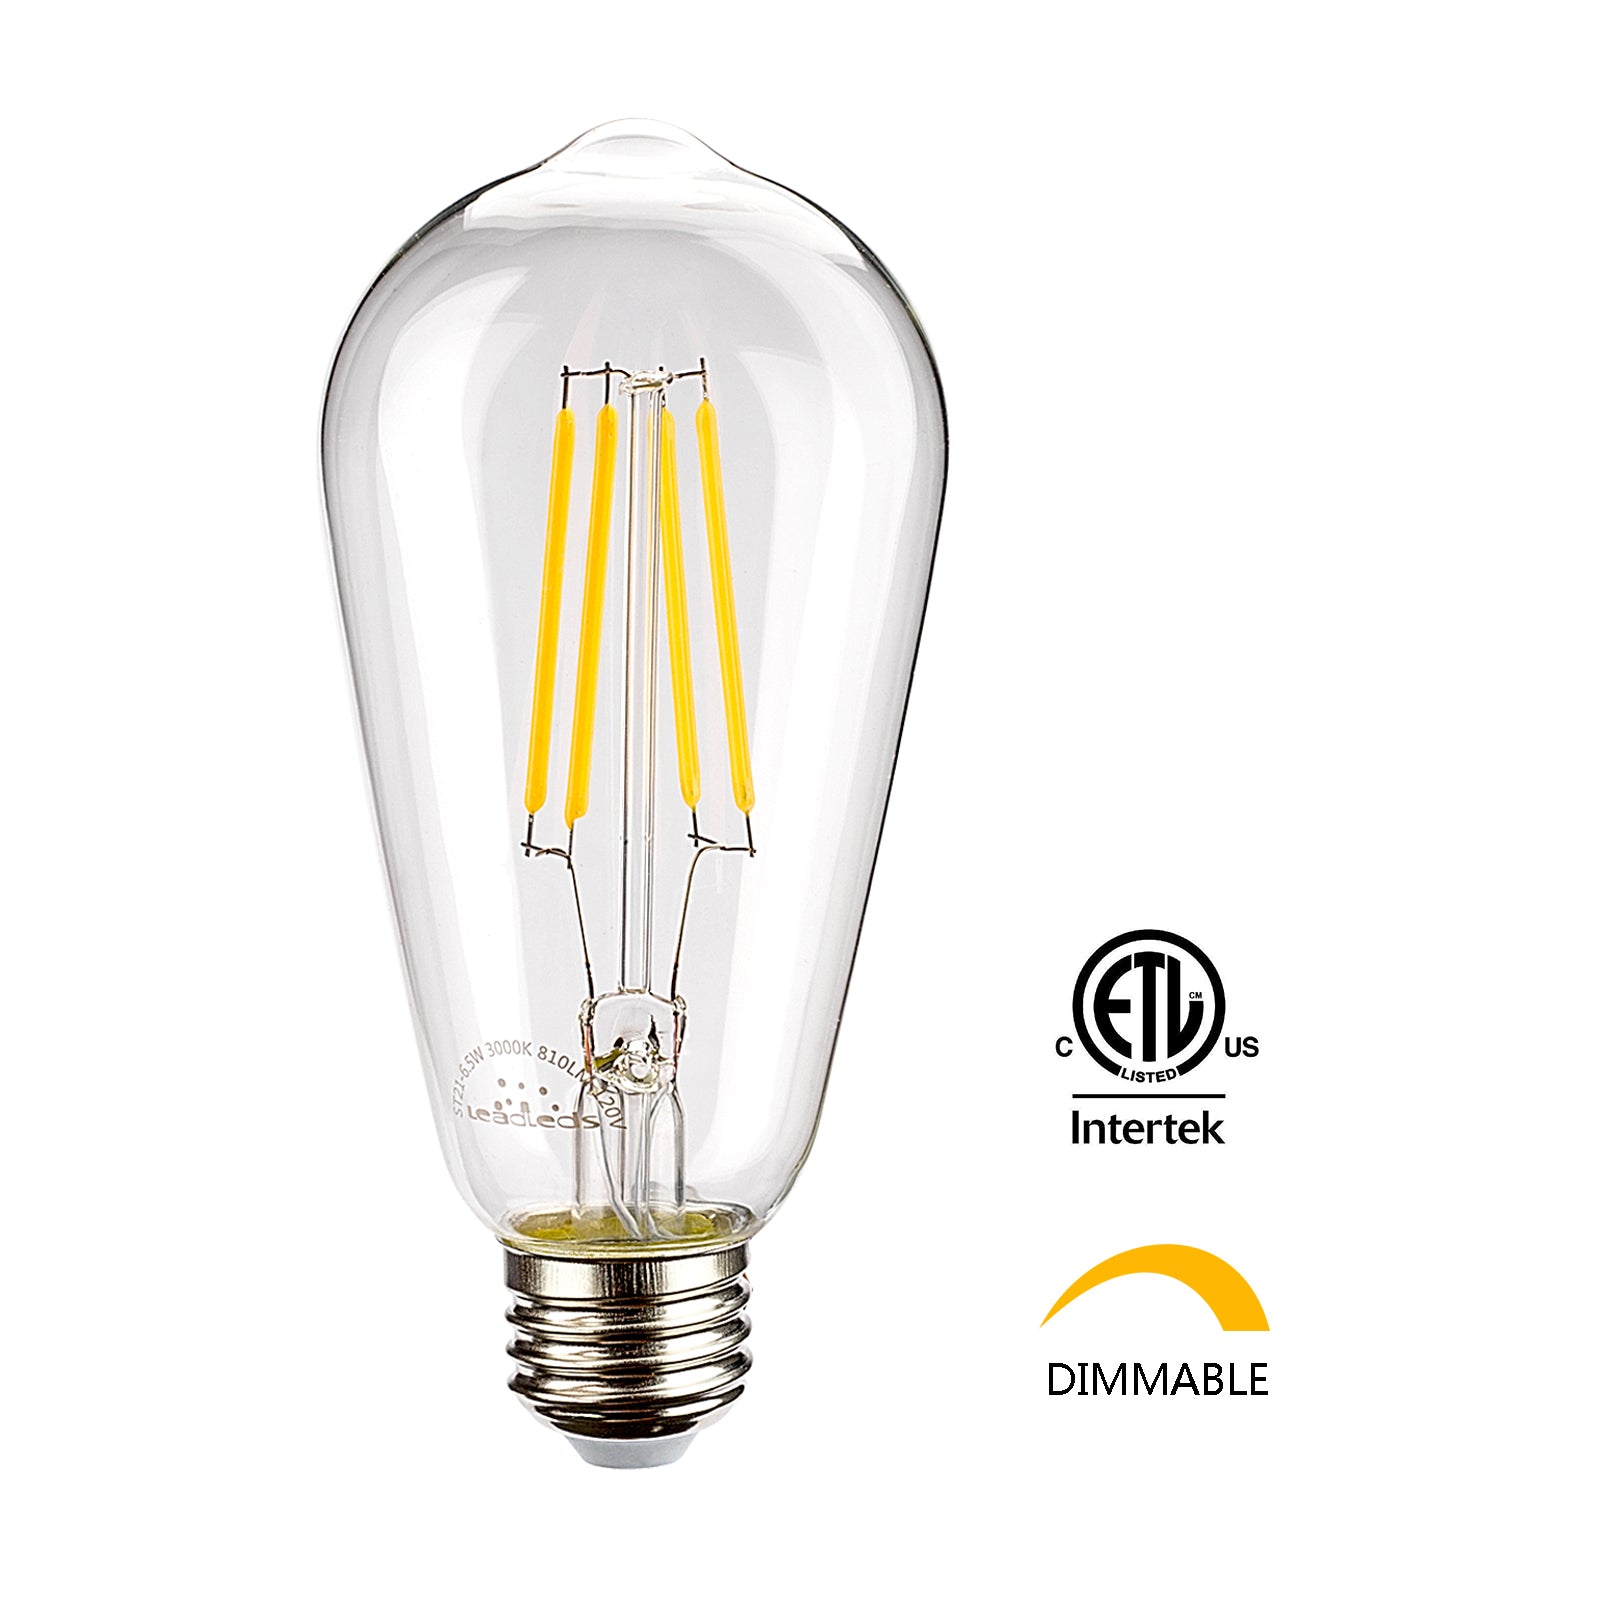 Leadleds ST21 Dimmable LED Filament Bulb 810 Lumens E26 3000K, 6.5W = 75W Incandescent Bulb - Leadleds